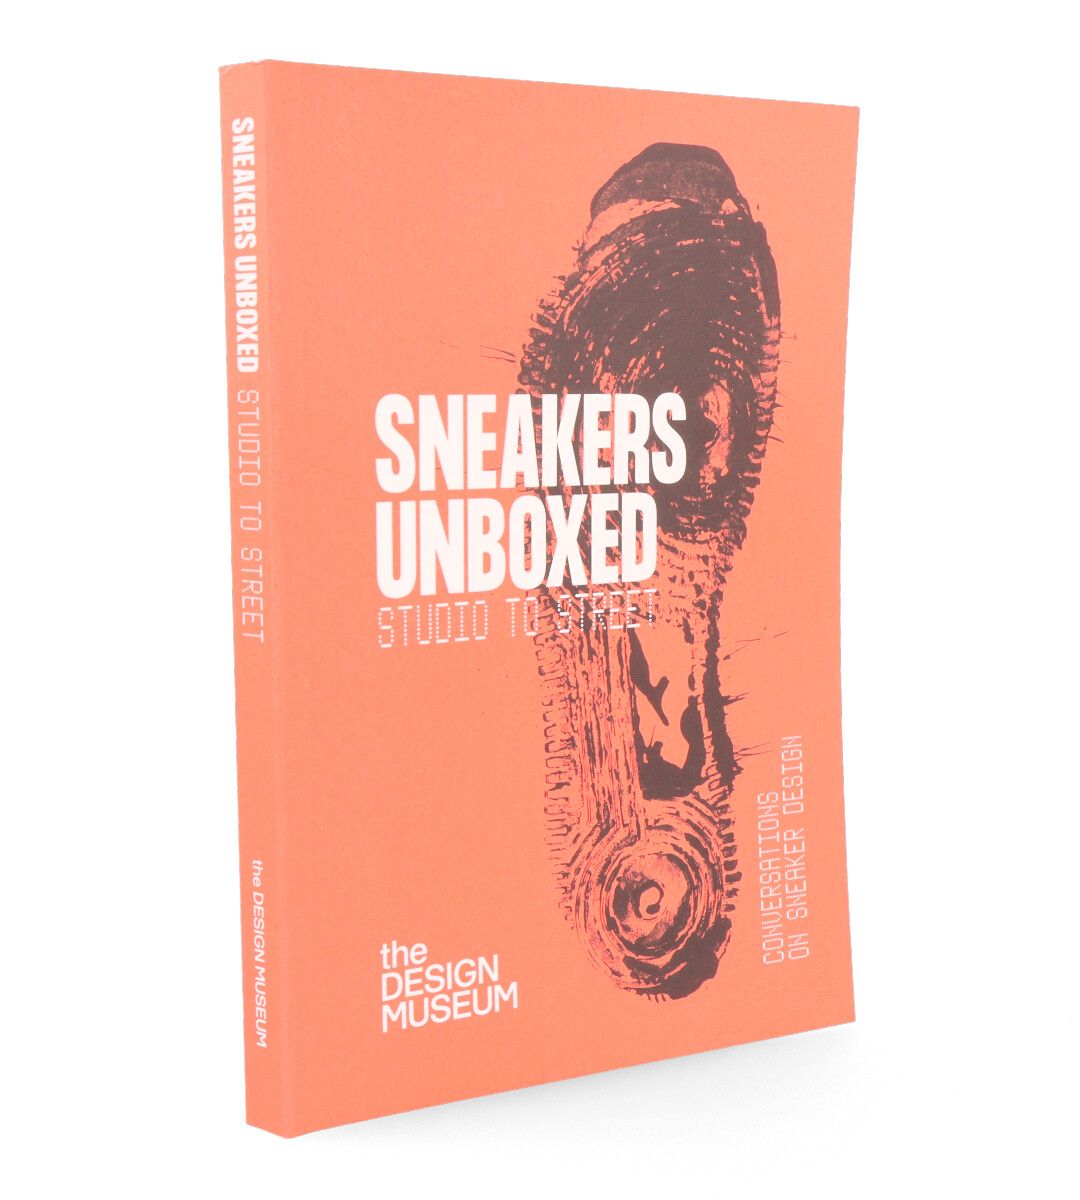 Sneakers unboxed